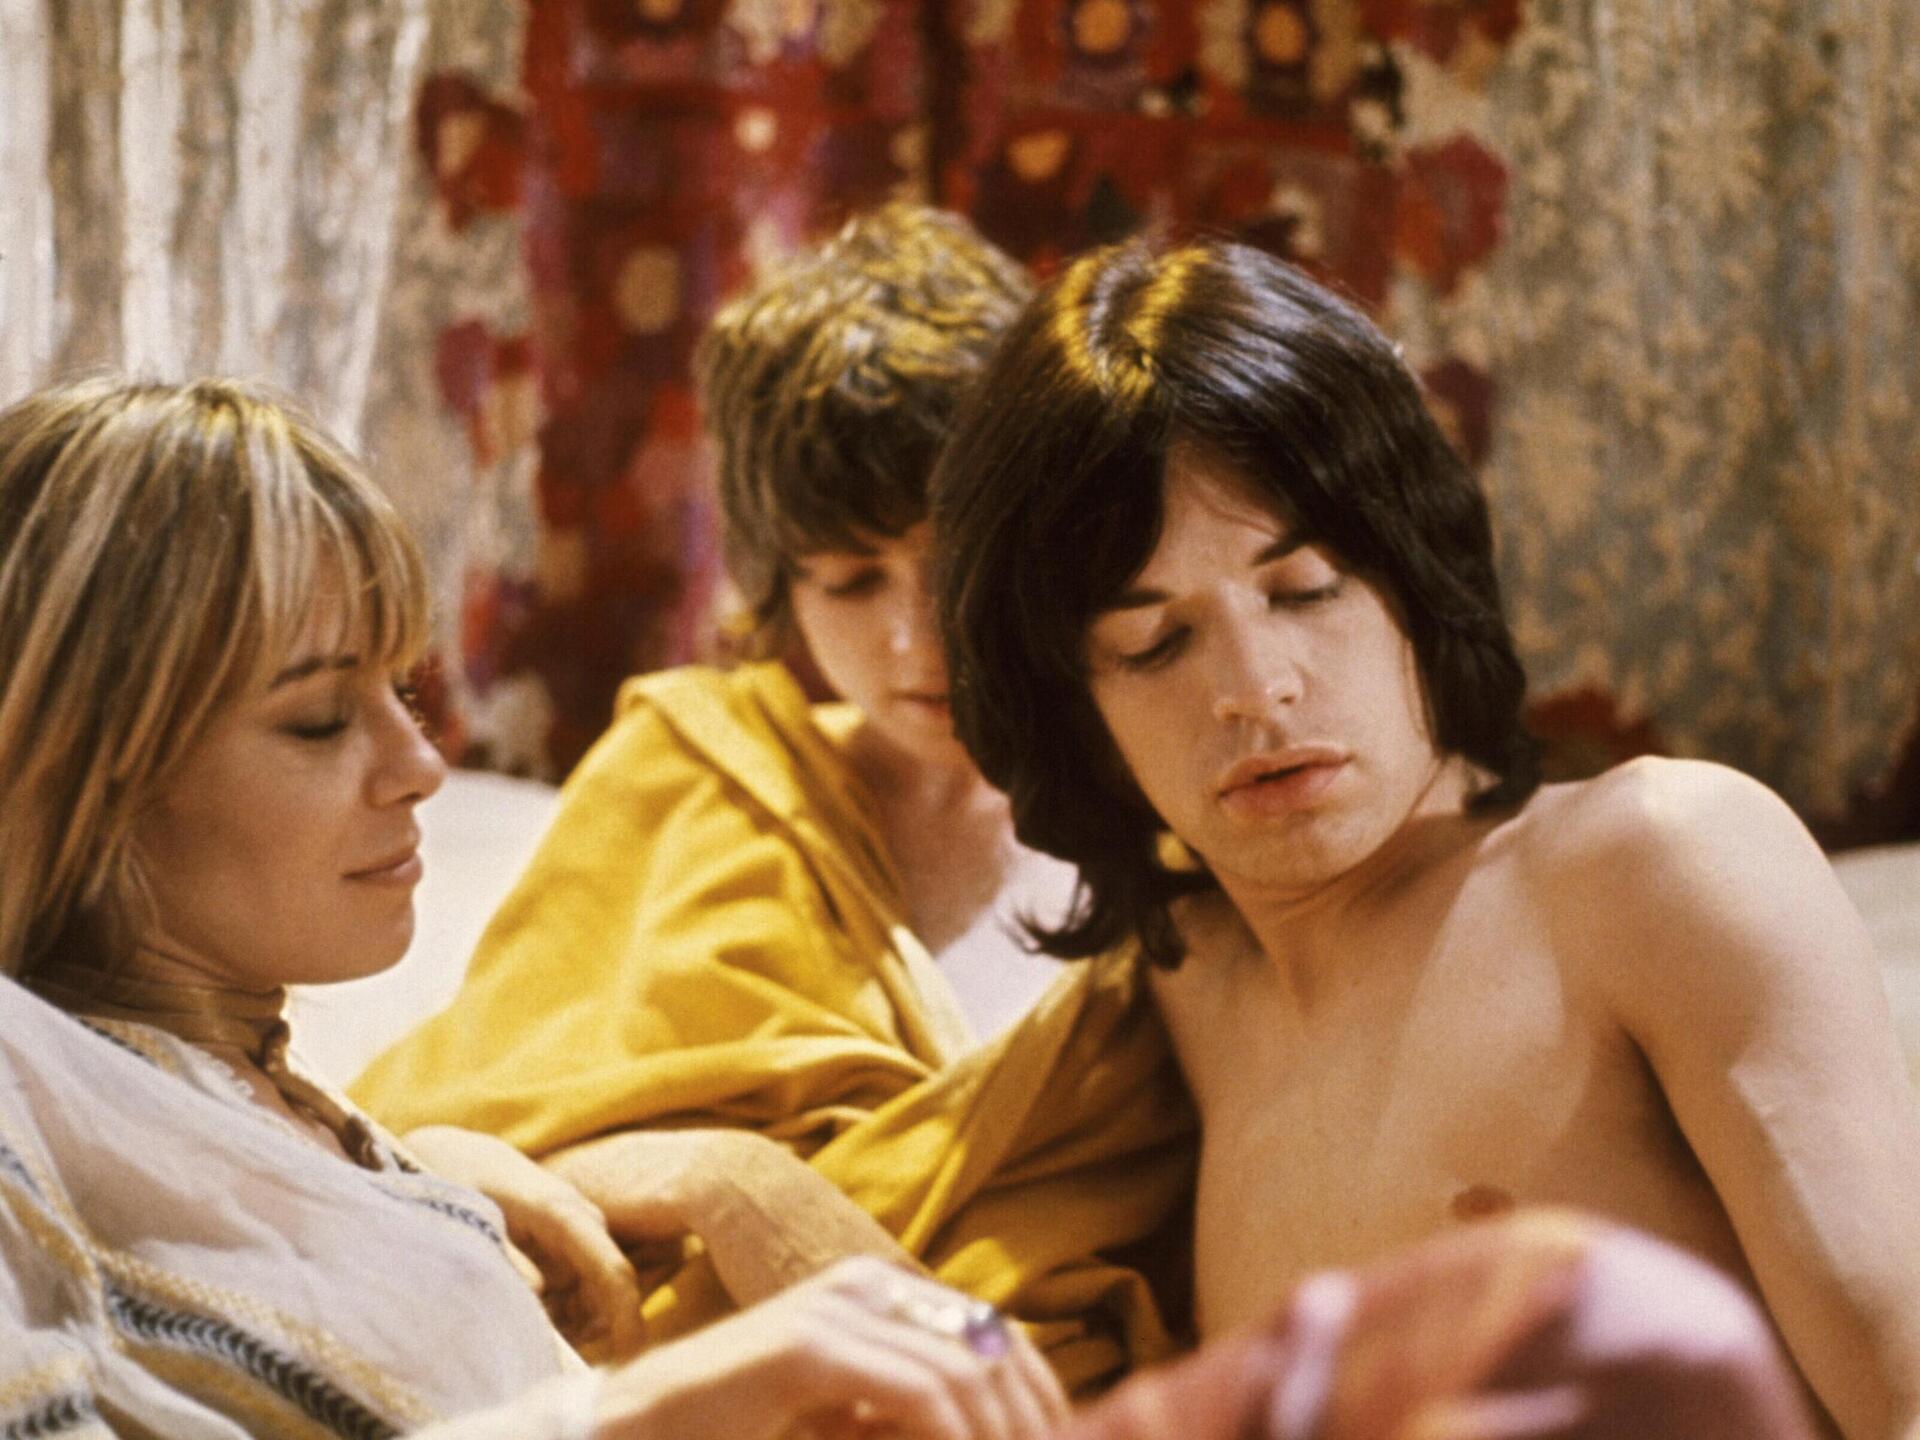 אניטה פלנברג ומיק ג'אגר בסרט "פרפורמנס", 1970